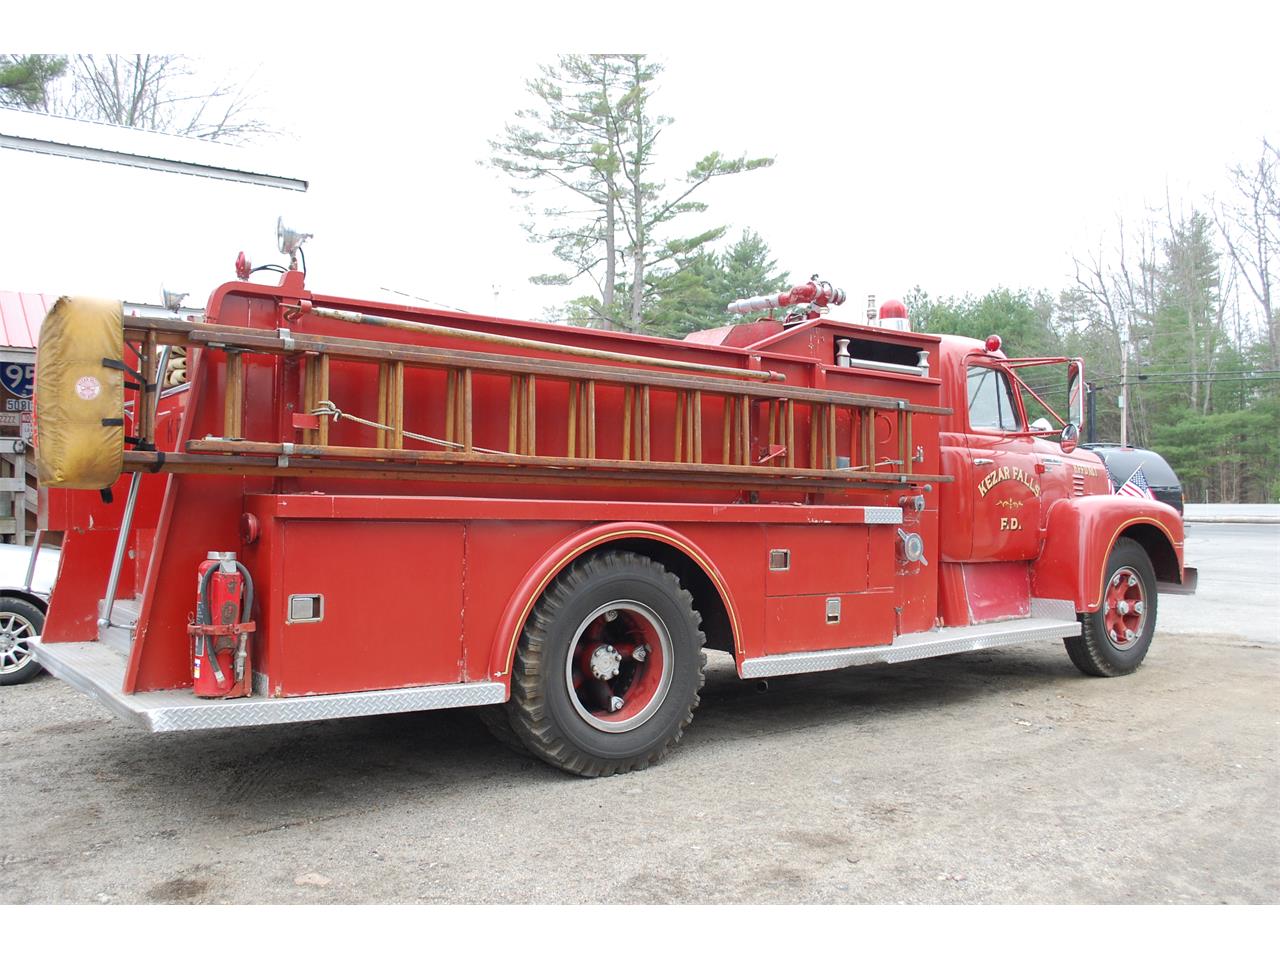 1962 International Fire Truck for Sale | www.bagsaleusa.com | CC-979753